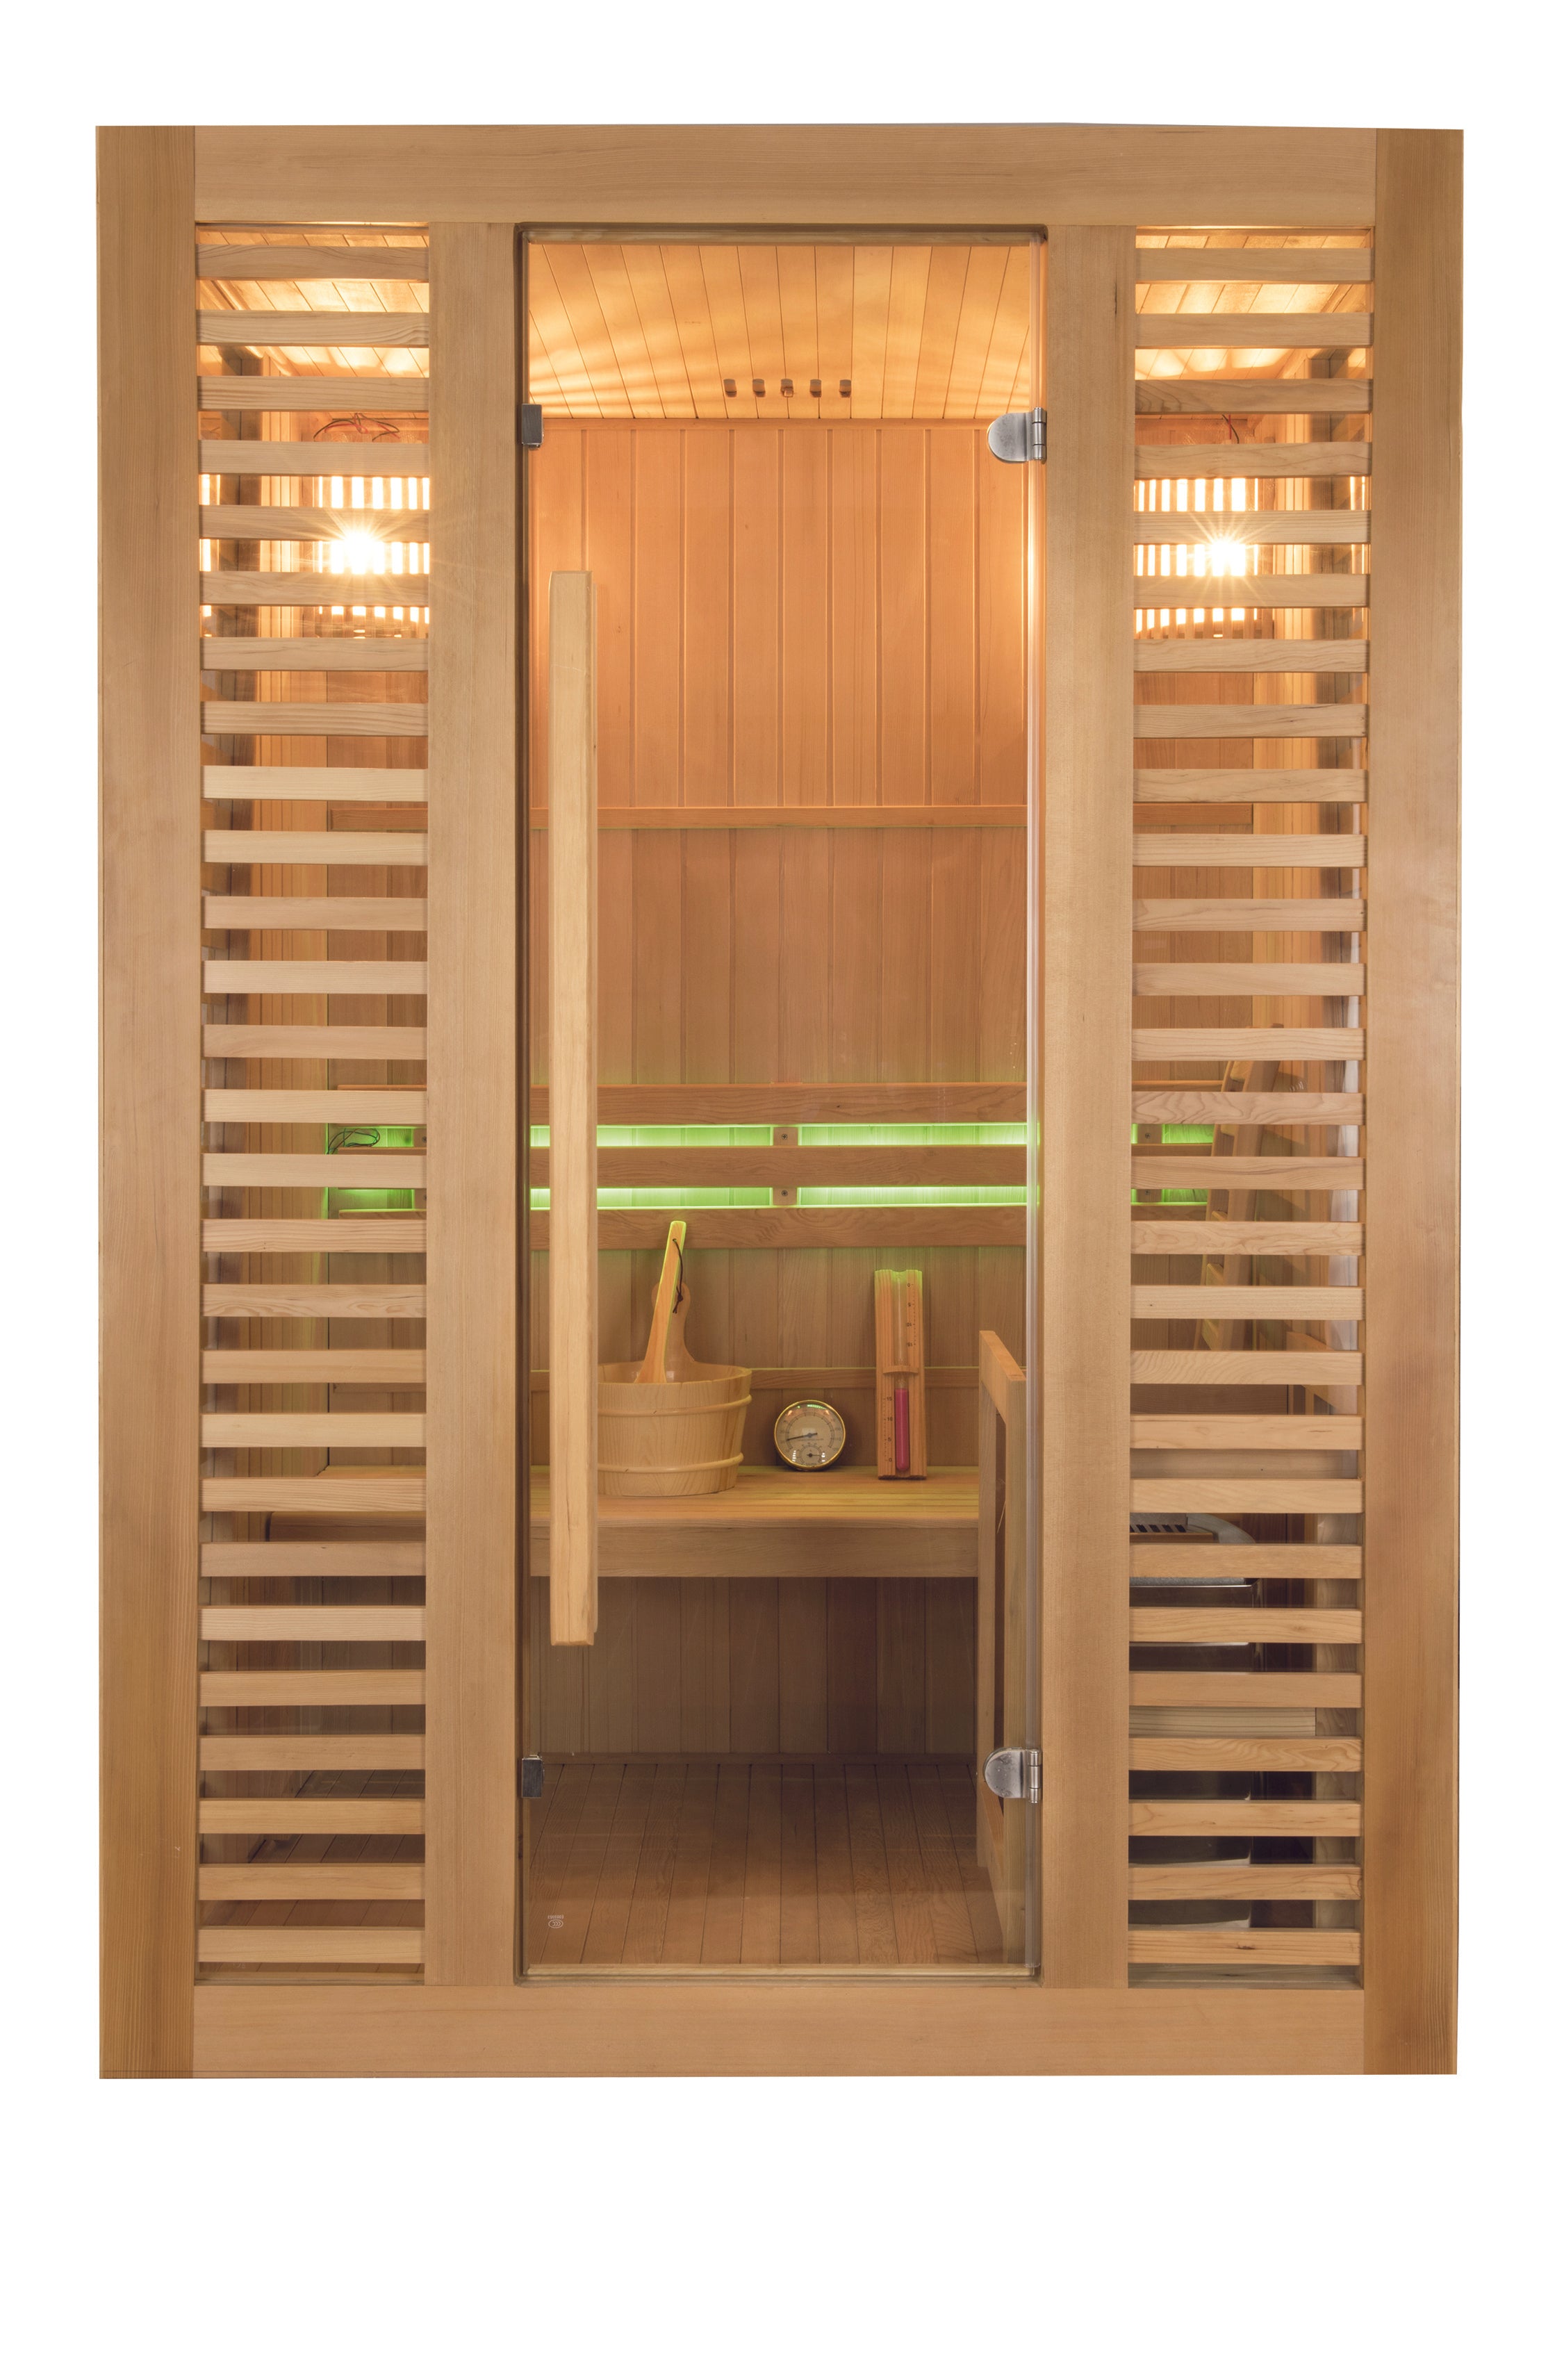 Tradicionalna sauna Venetian 2 (2 osobe) 3.5kW